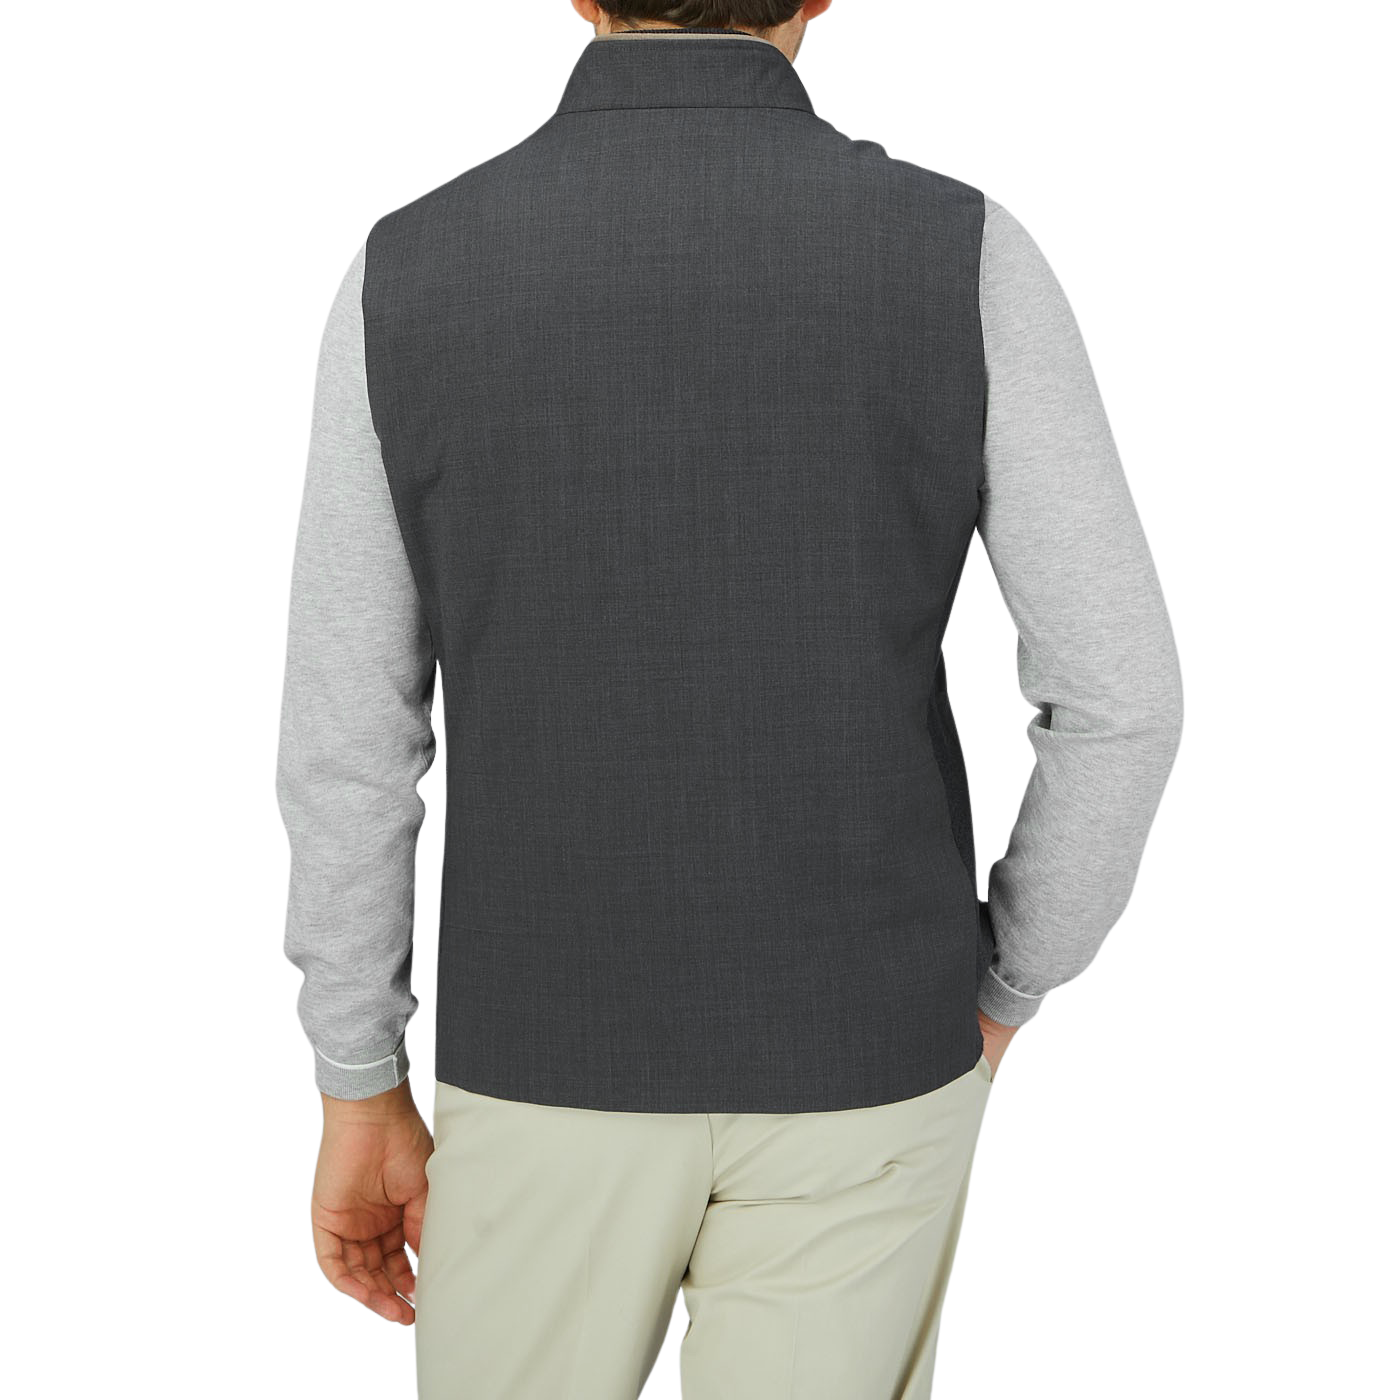 The back view of a man wearing a Maurizio Baldassari Charcoal Grey Merino Wool Travel Gilet.